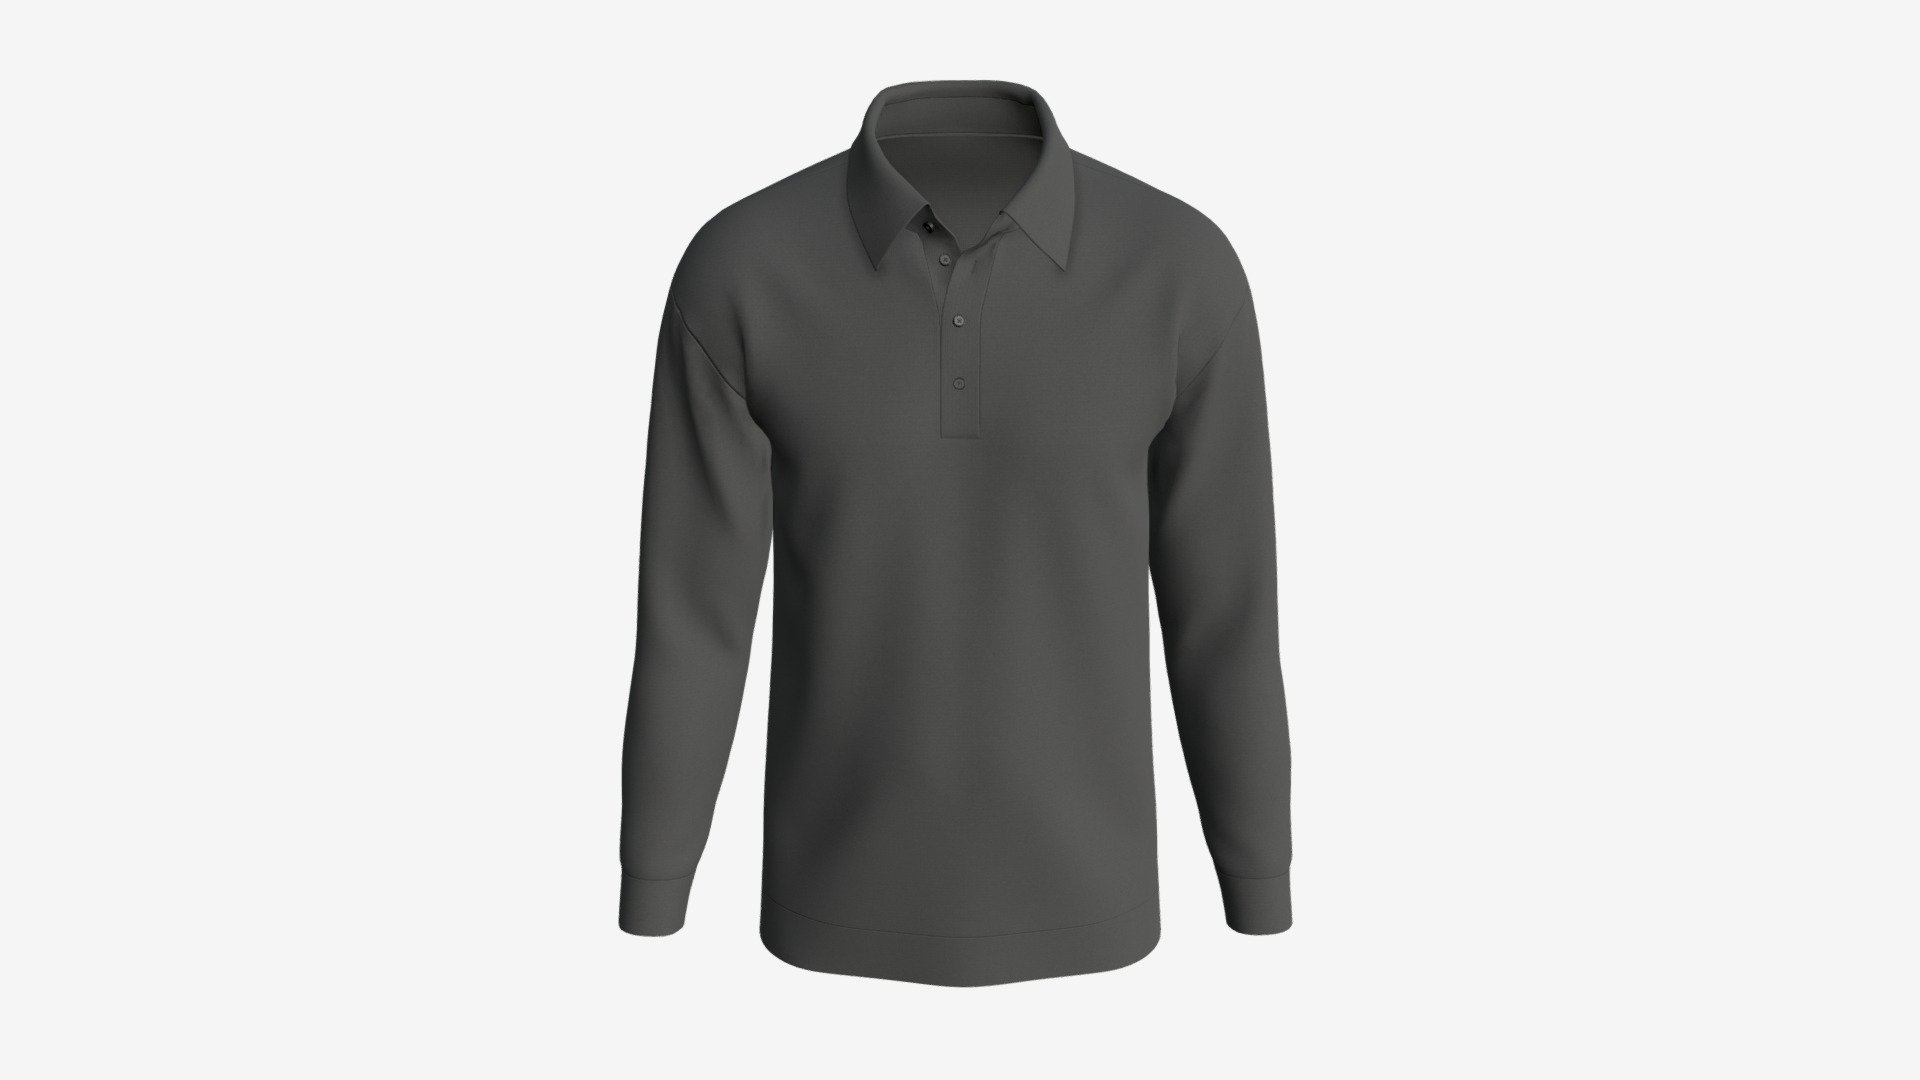 Long Sleeve Polo Shirt for Men Mockup 02 Black - Buy Royalty Free 3D ...